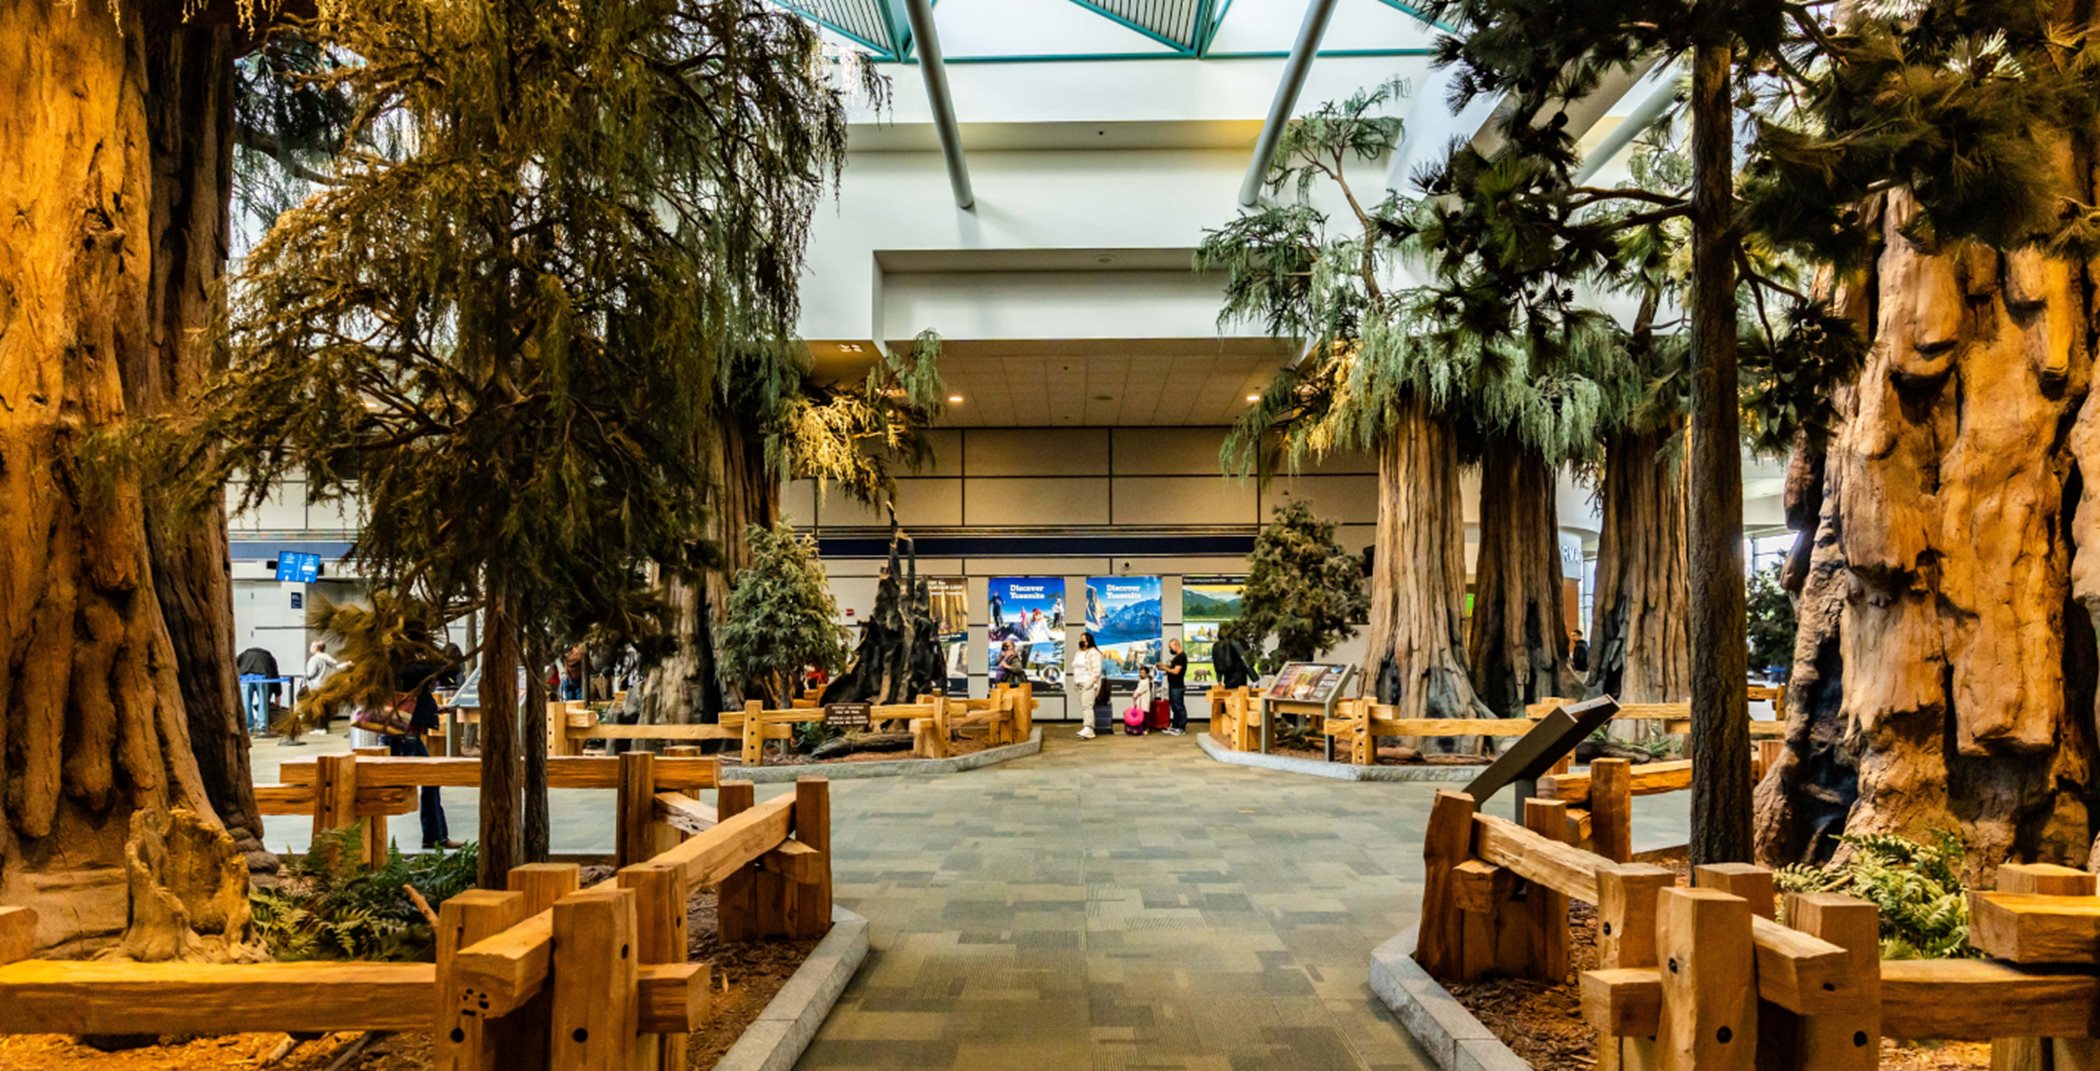 The Fresno Yosemite International Airport interior with sequoia trees